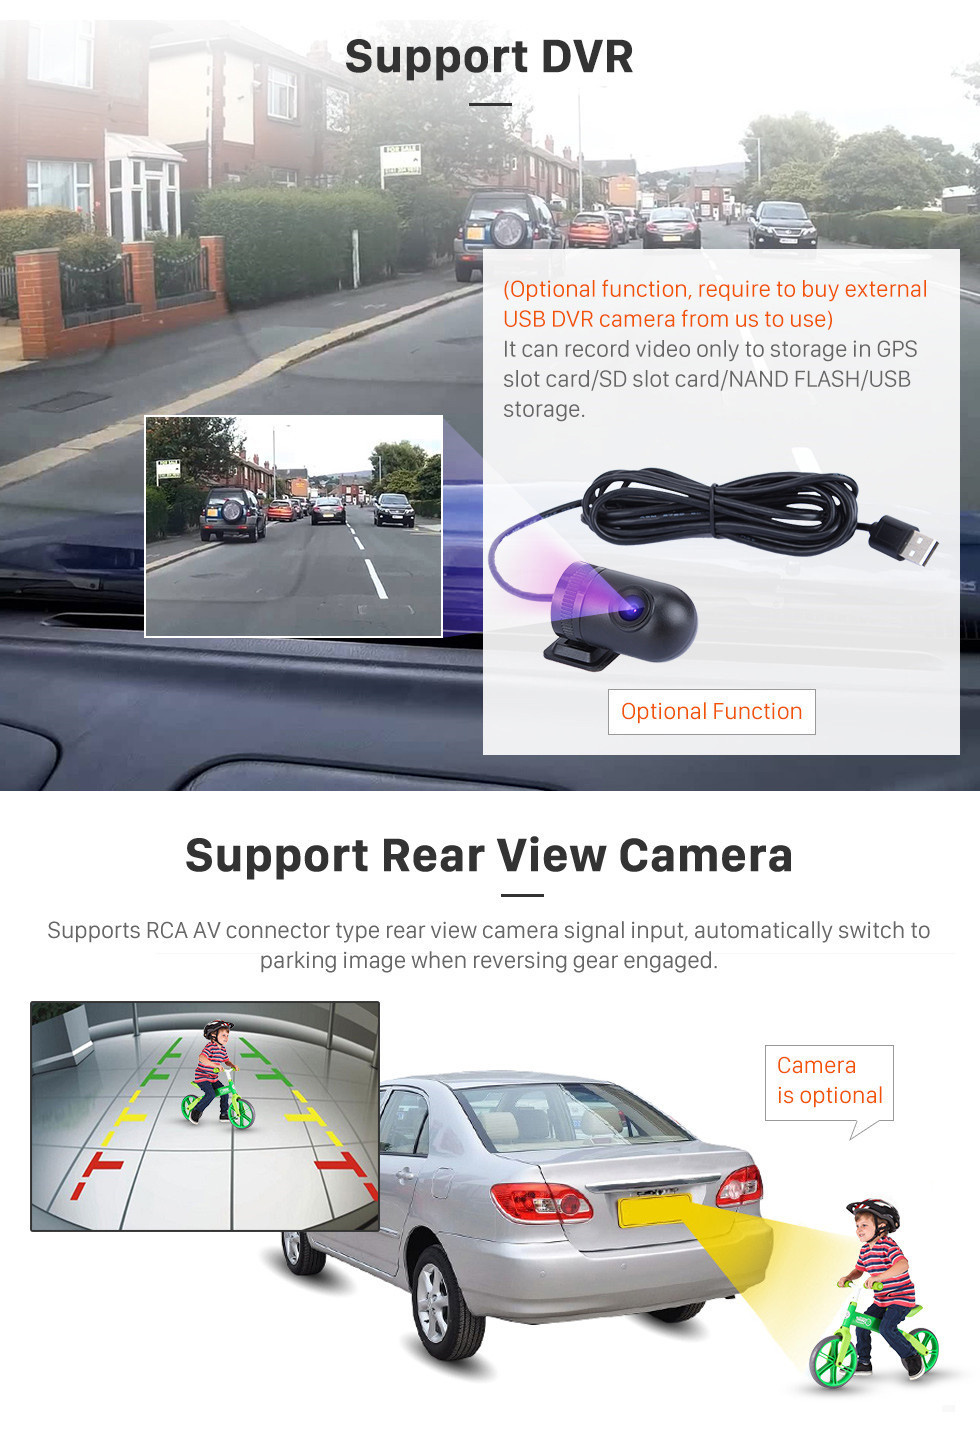 Seicane 10,1 zoll Android 9,0 1024 * 600 Touchscreen 2014 2015 Jeep Kompass Radio Bluetooth GPS Navigationssystem mit OBD2 DVR 4G Wlan Lenkradsteuerung Backup Kamera Spiegel-Verbindung